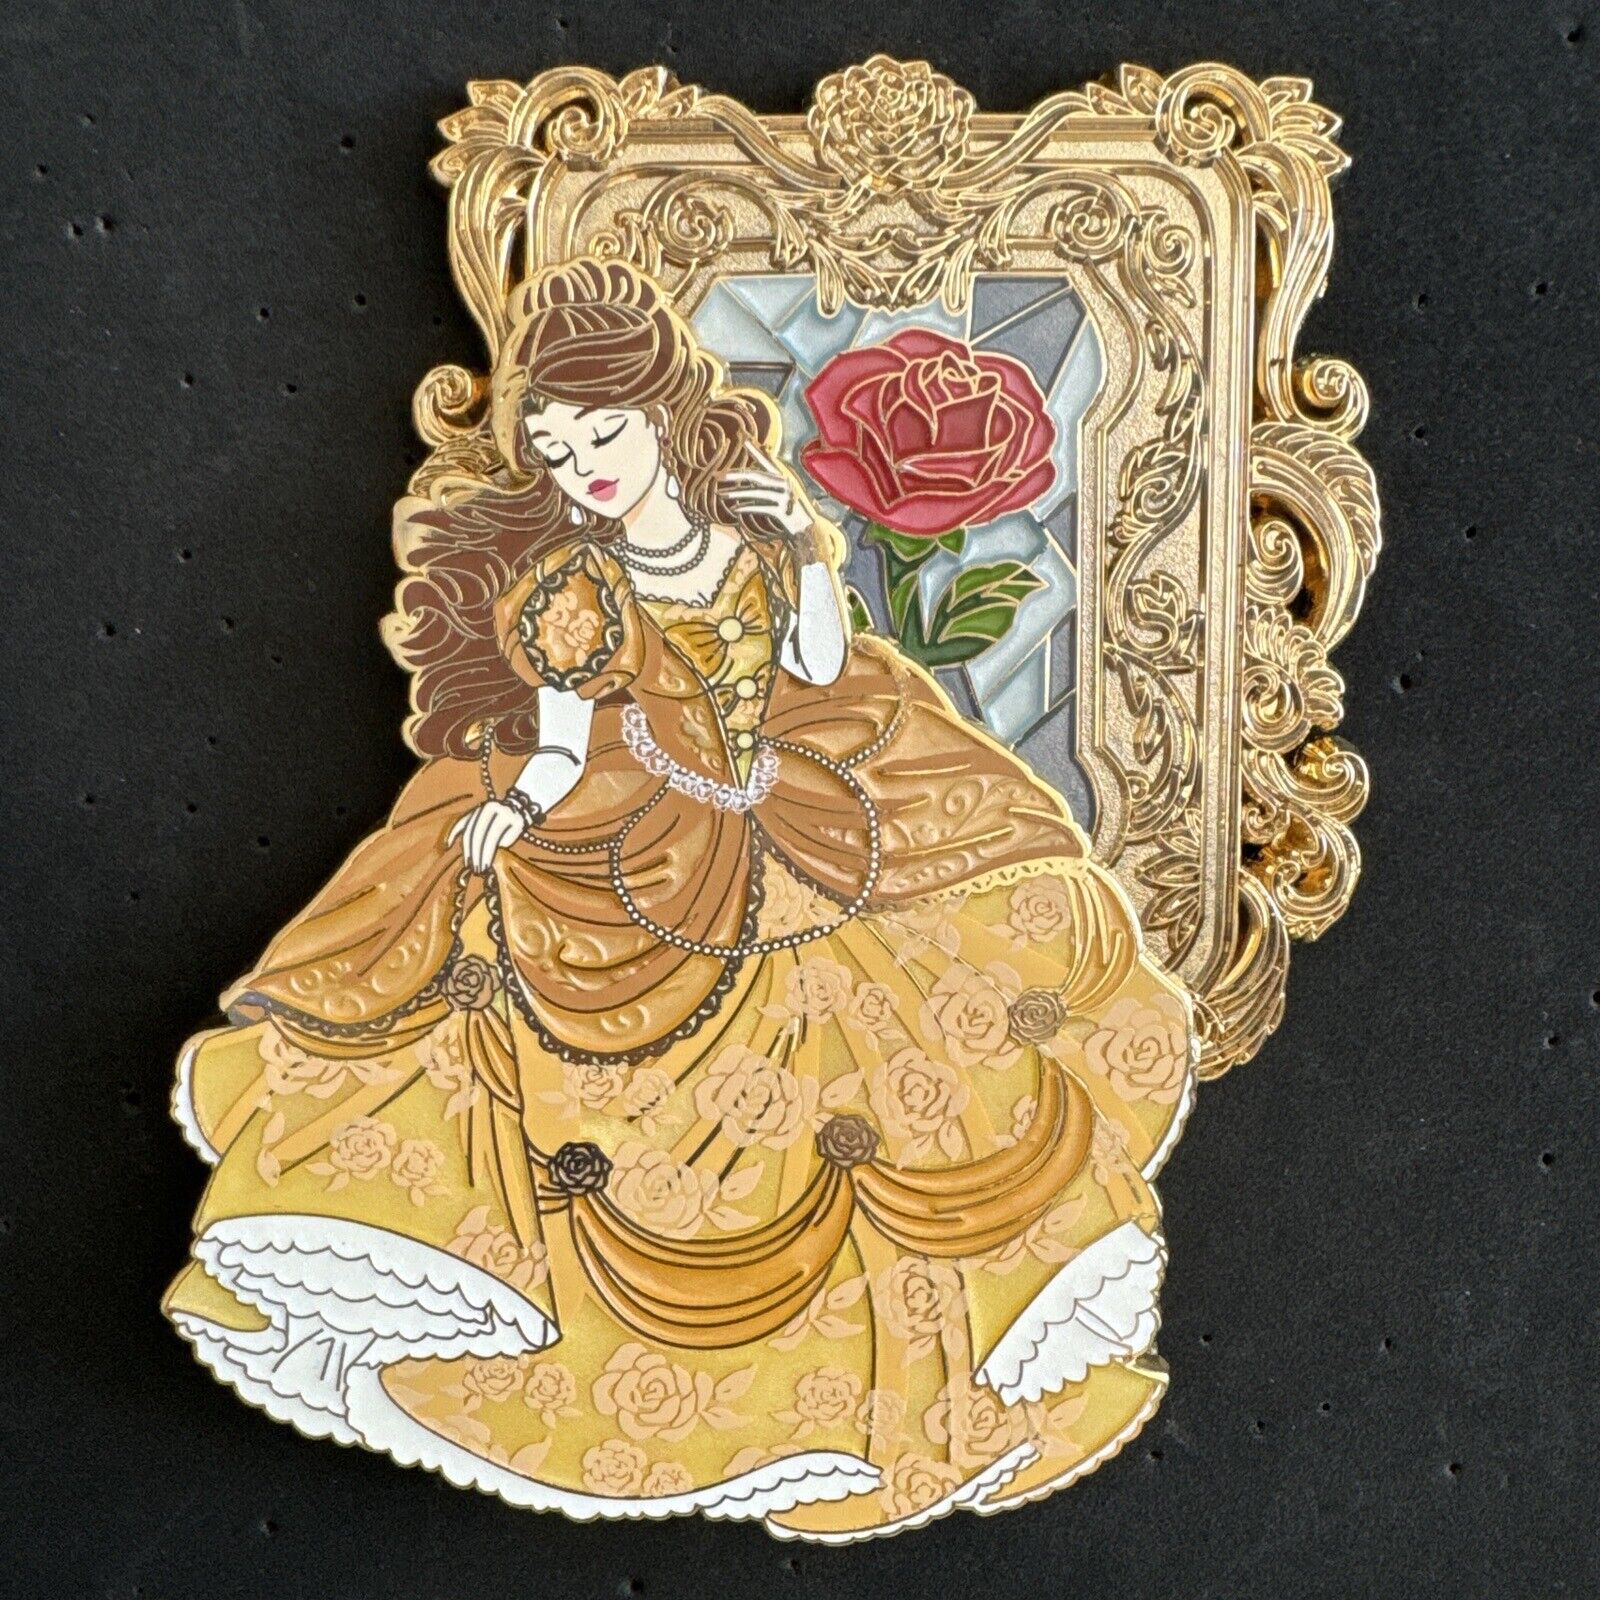 Belle Enchanted Rose Yellow Ballgown Disney Fantasy Pin Elegant Beauty LE